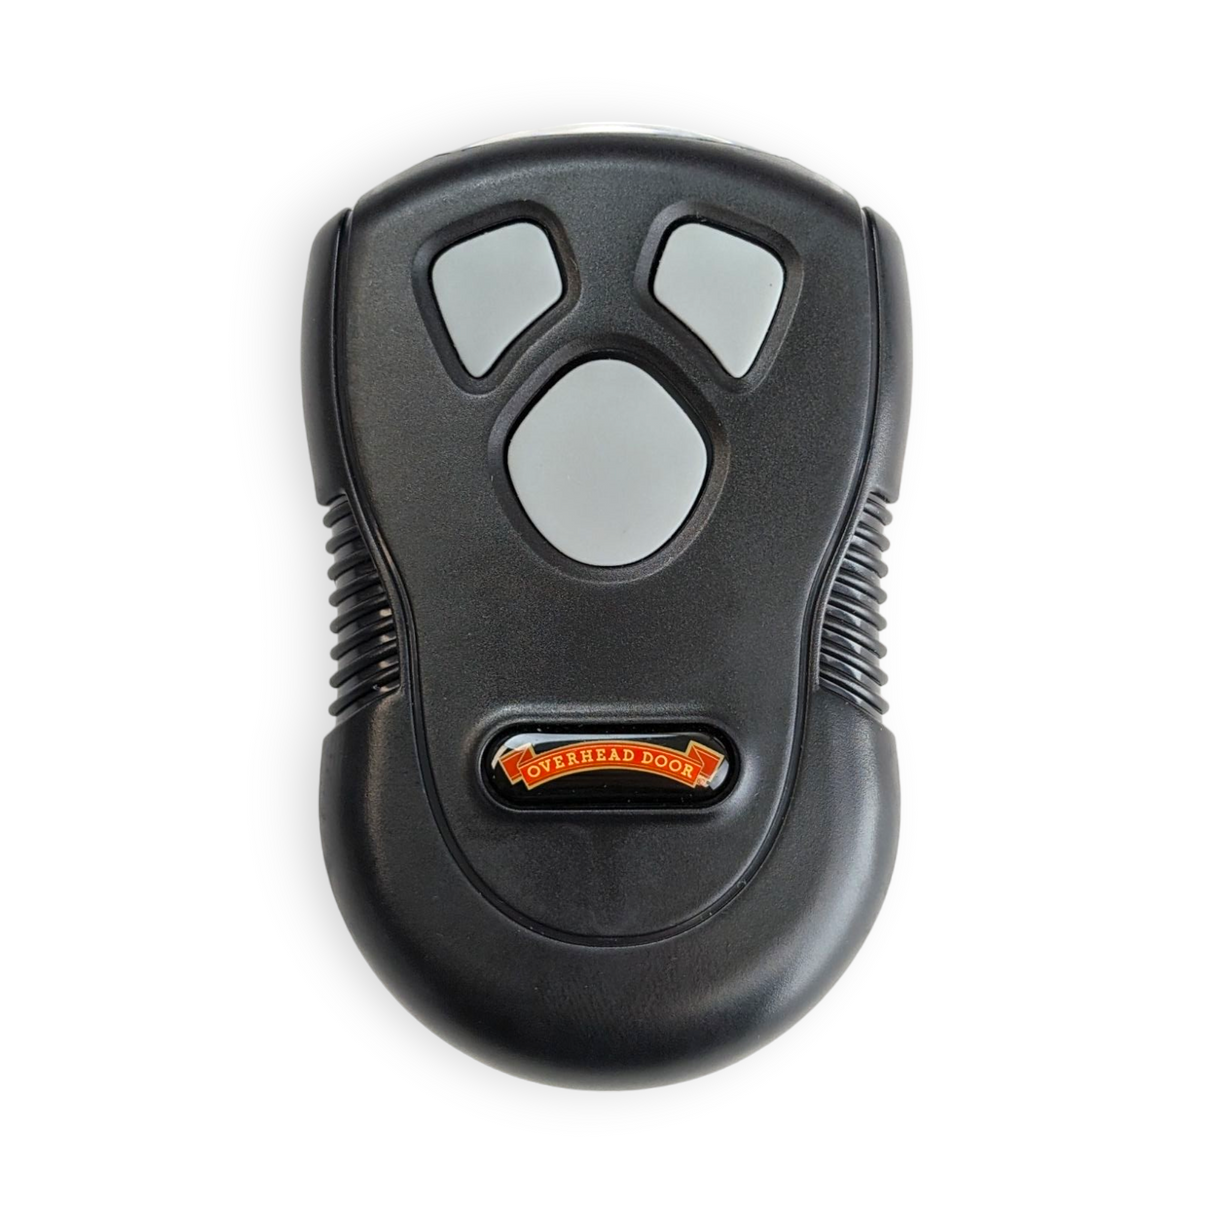 3 Button Remote with Flashlight | OCDFTD-3BL